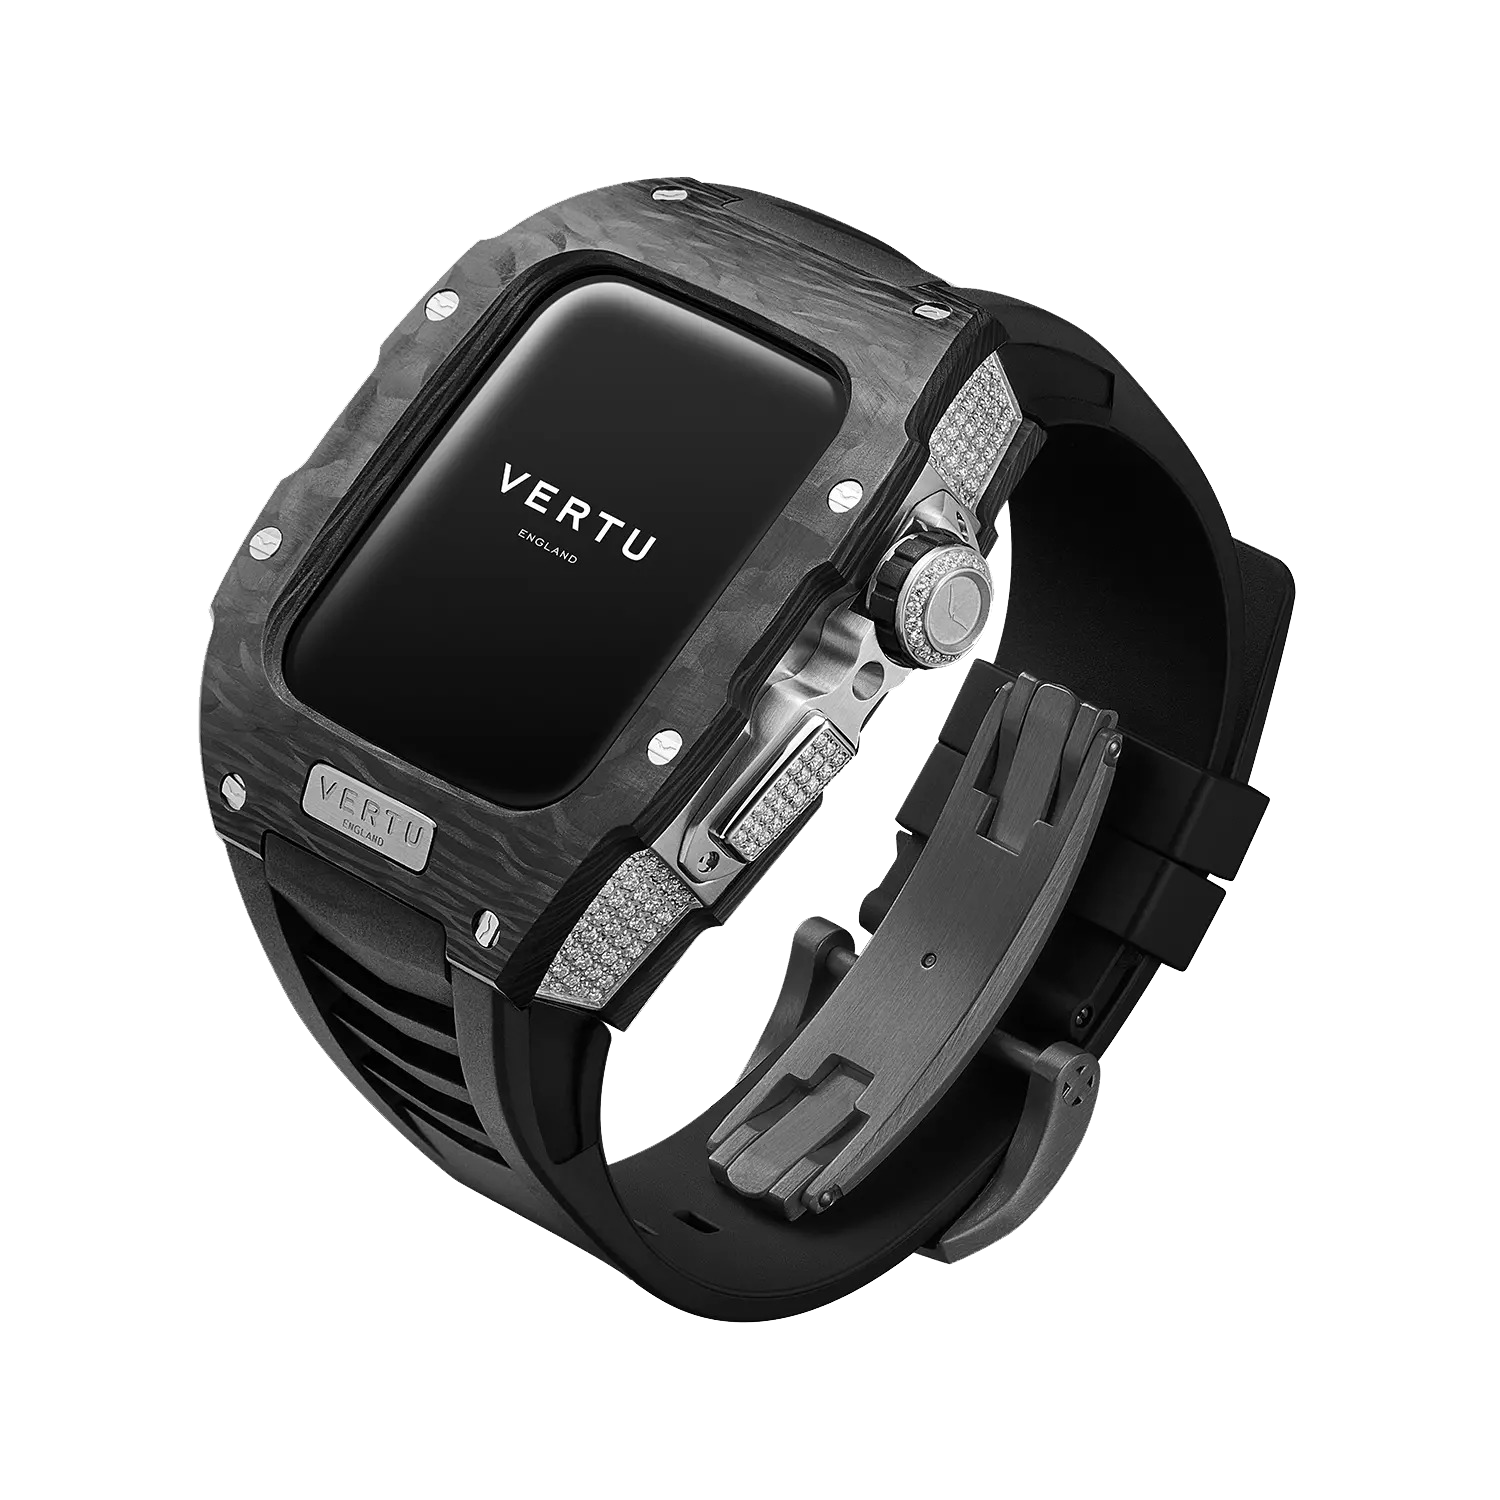 METAWATCH Black Diamond Smartwatch - Black Strap